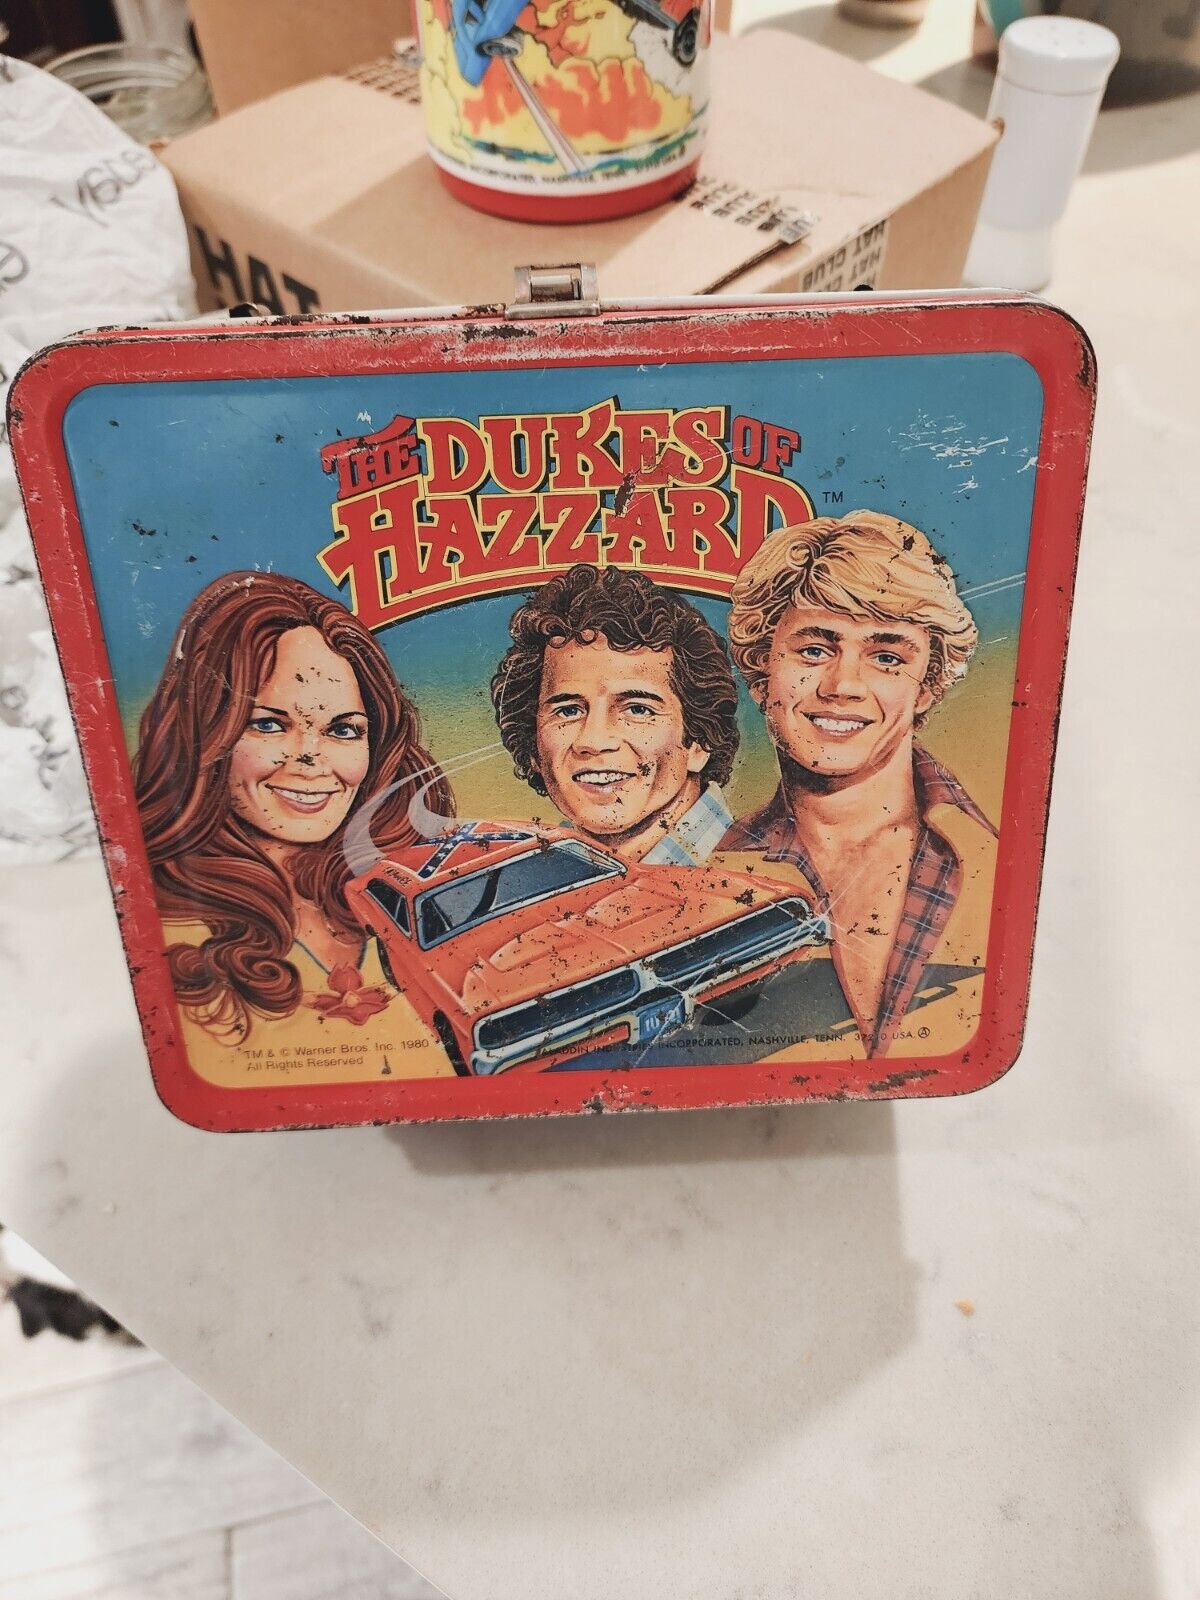 Vintage Dukes Of Hazzard Metal Lunch Box Thermos 1980 Aladdin Bo Luke Daisy Duke